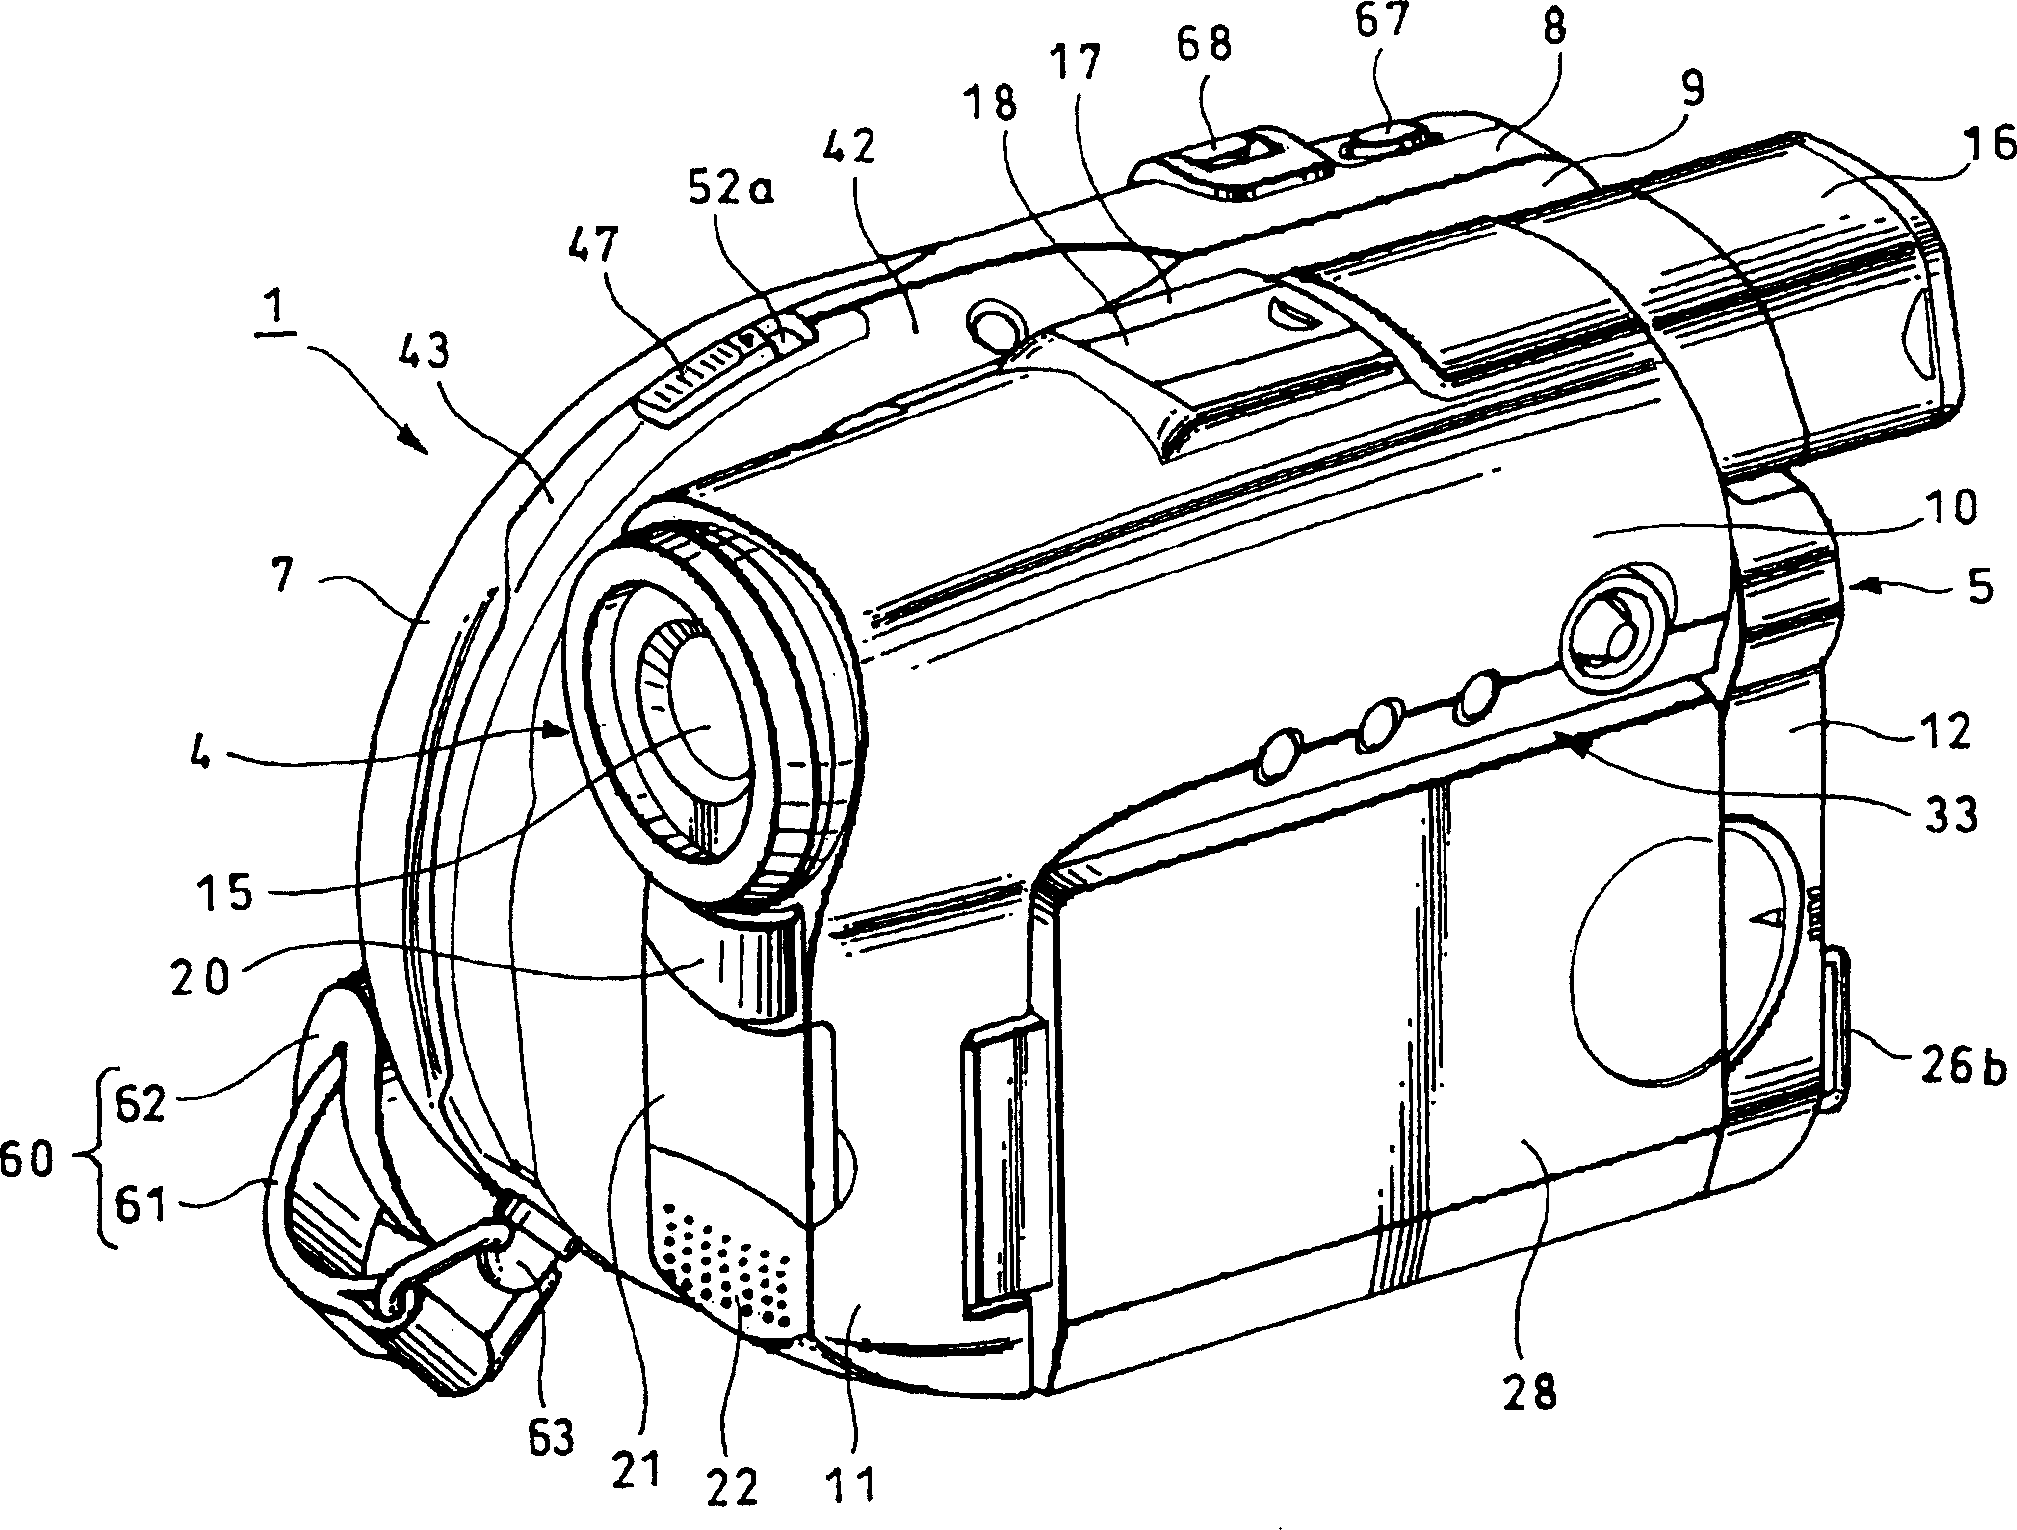 Image pickup apparatus